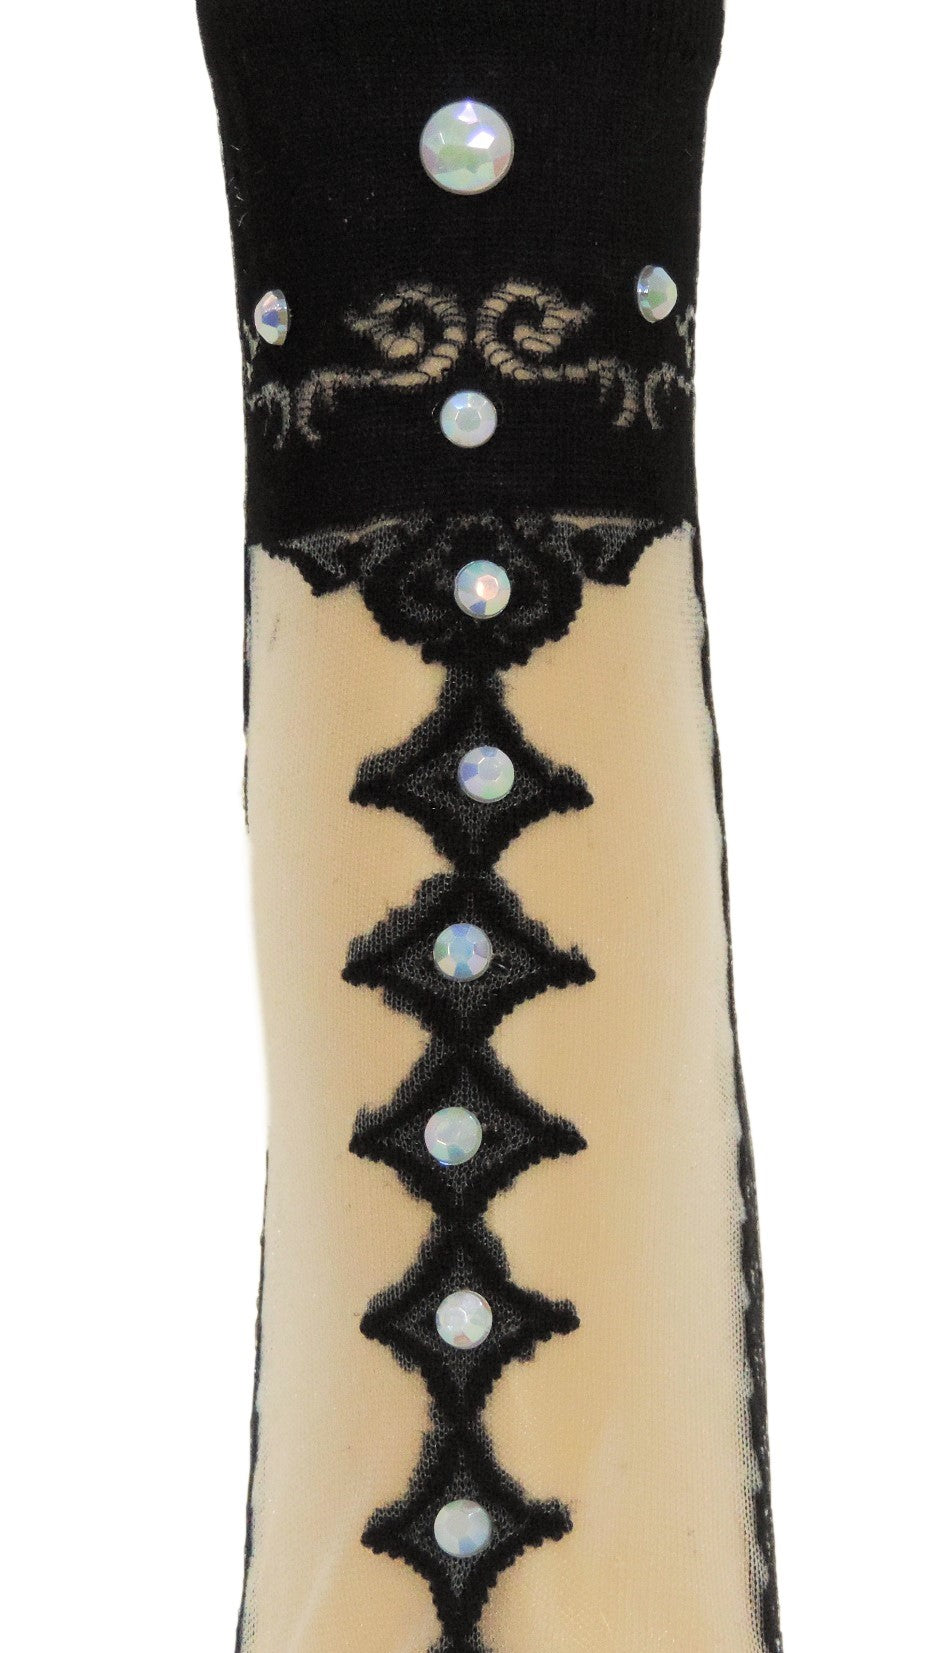 Elegant Black Custom Sheer Socks with beads - Global Trendz Fashion®